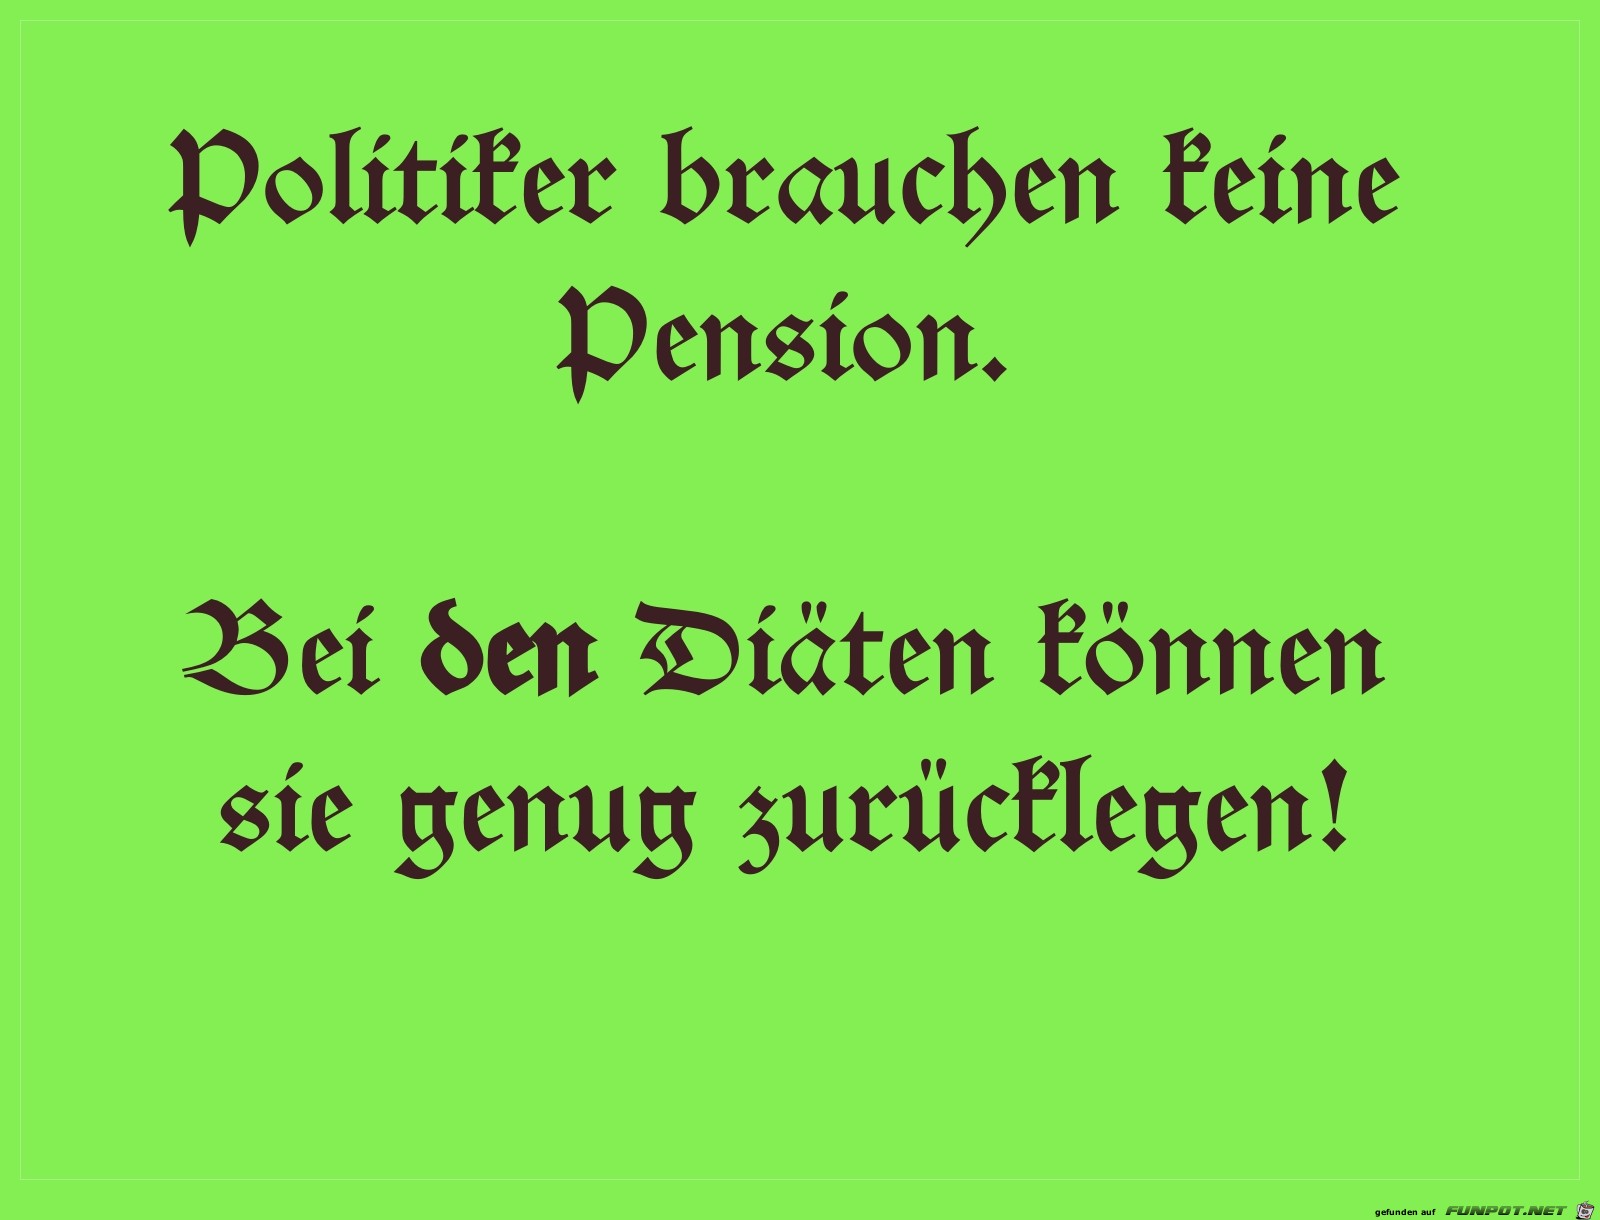 politiker pension